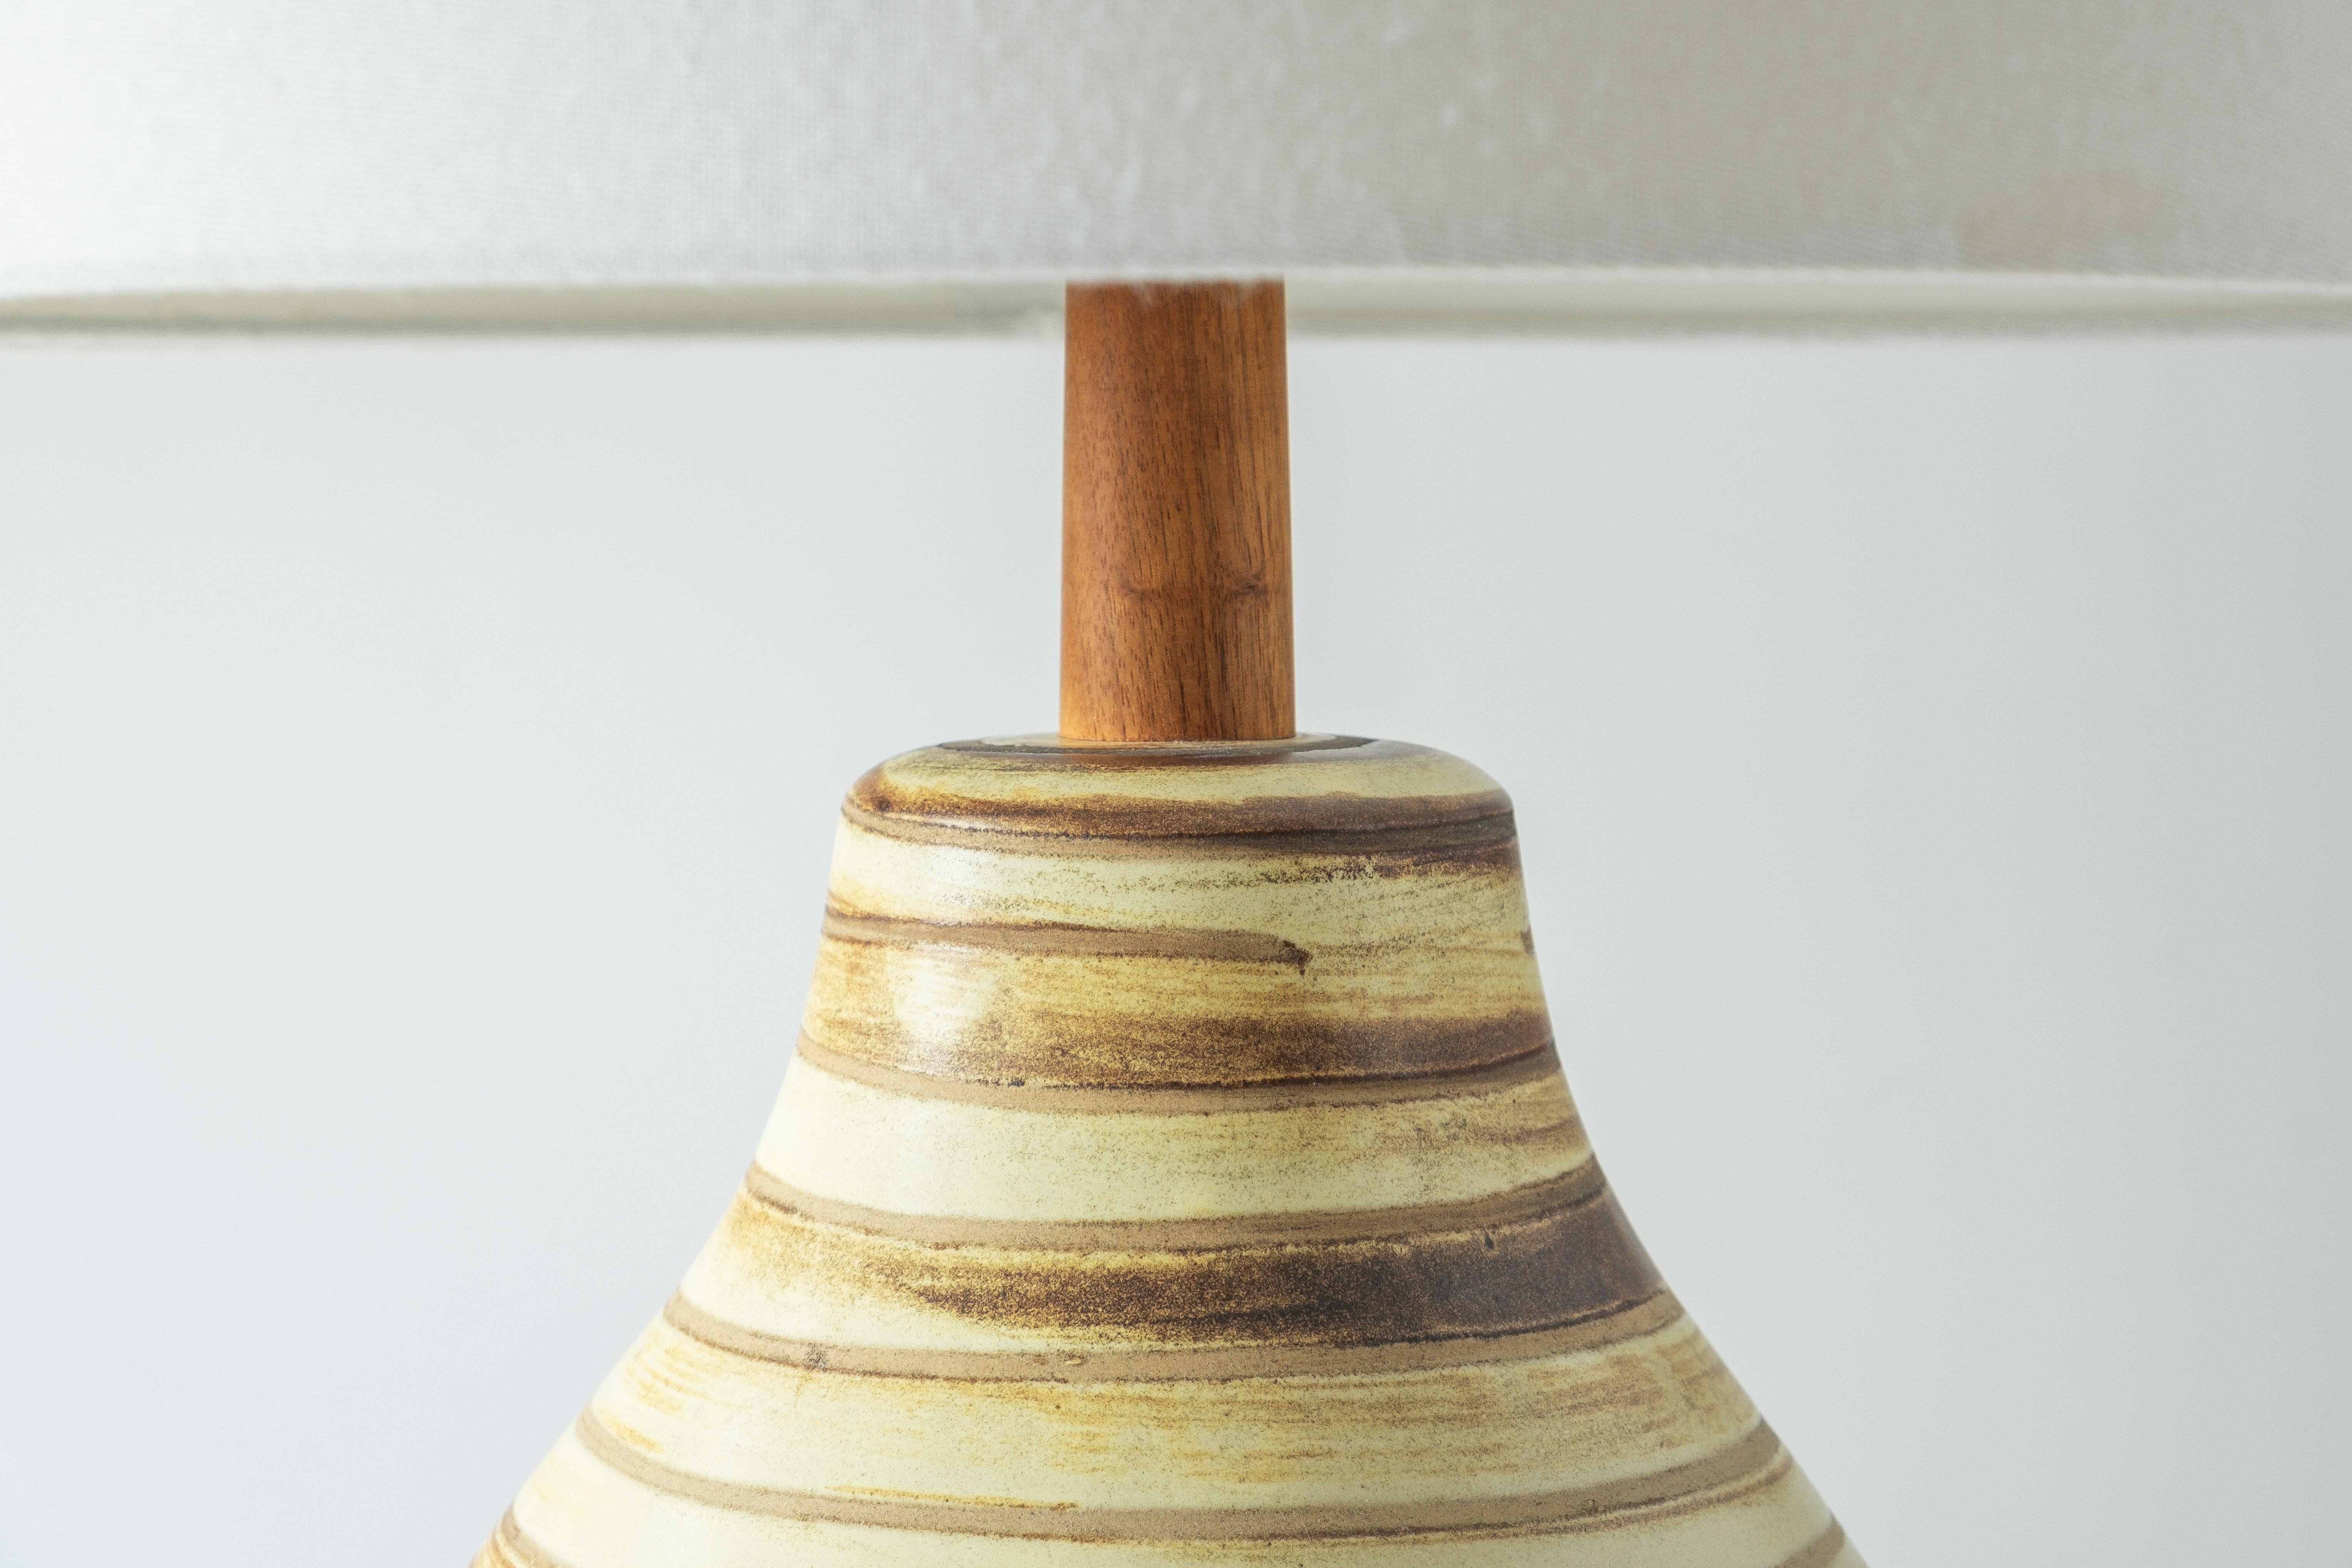 Mid-20th Century Martz / Marshall Studios Mid Century Ceramic Table Lamp, Pale Yellow / Brown